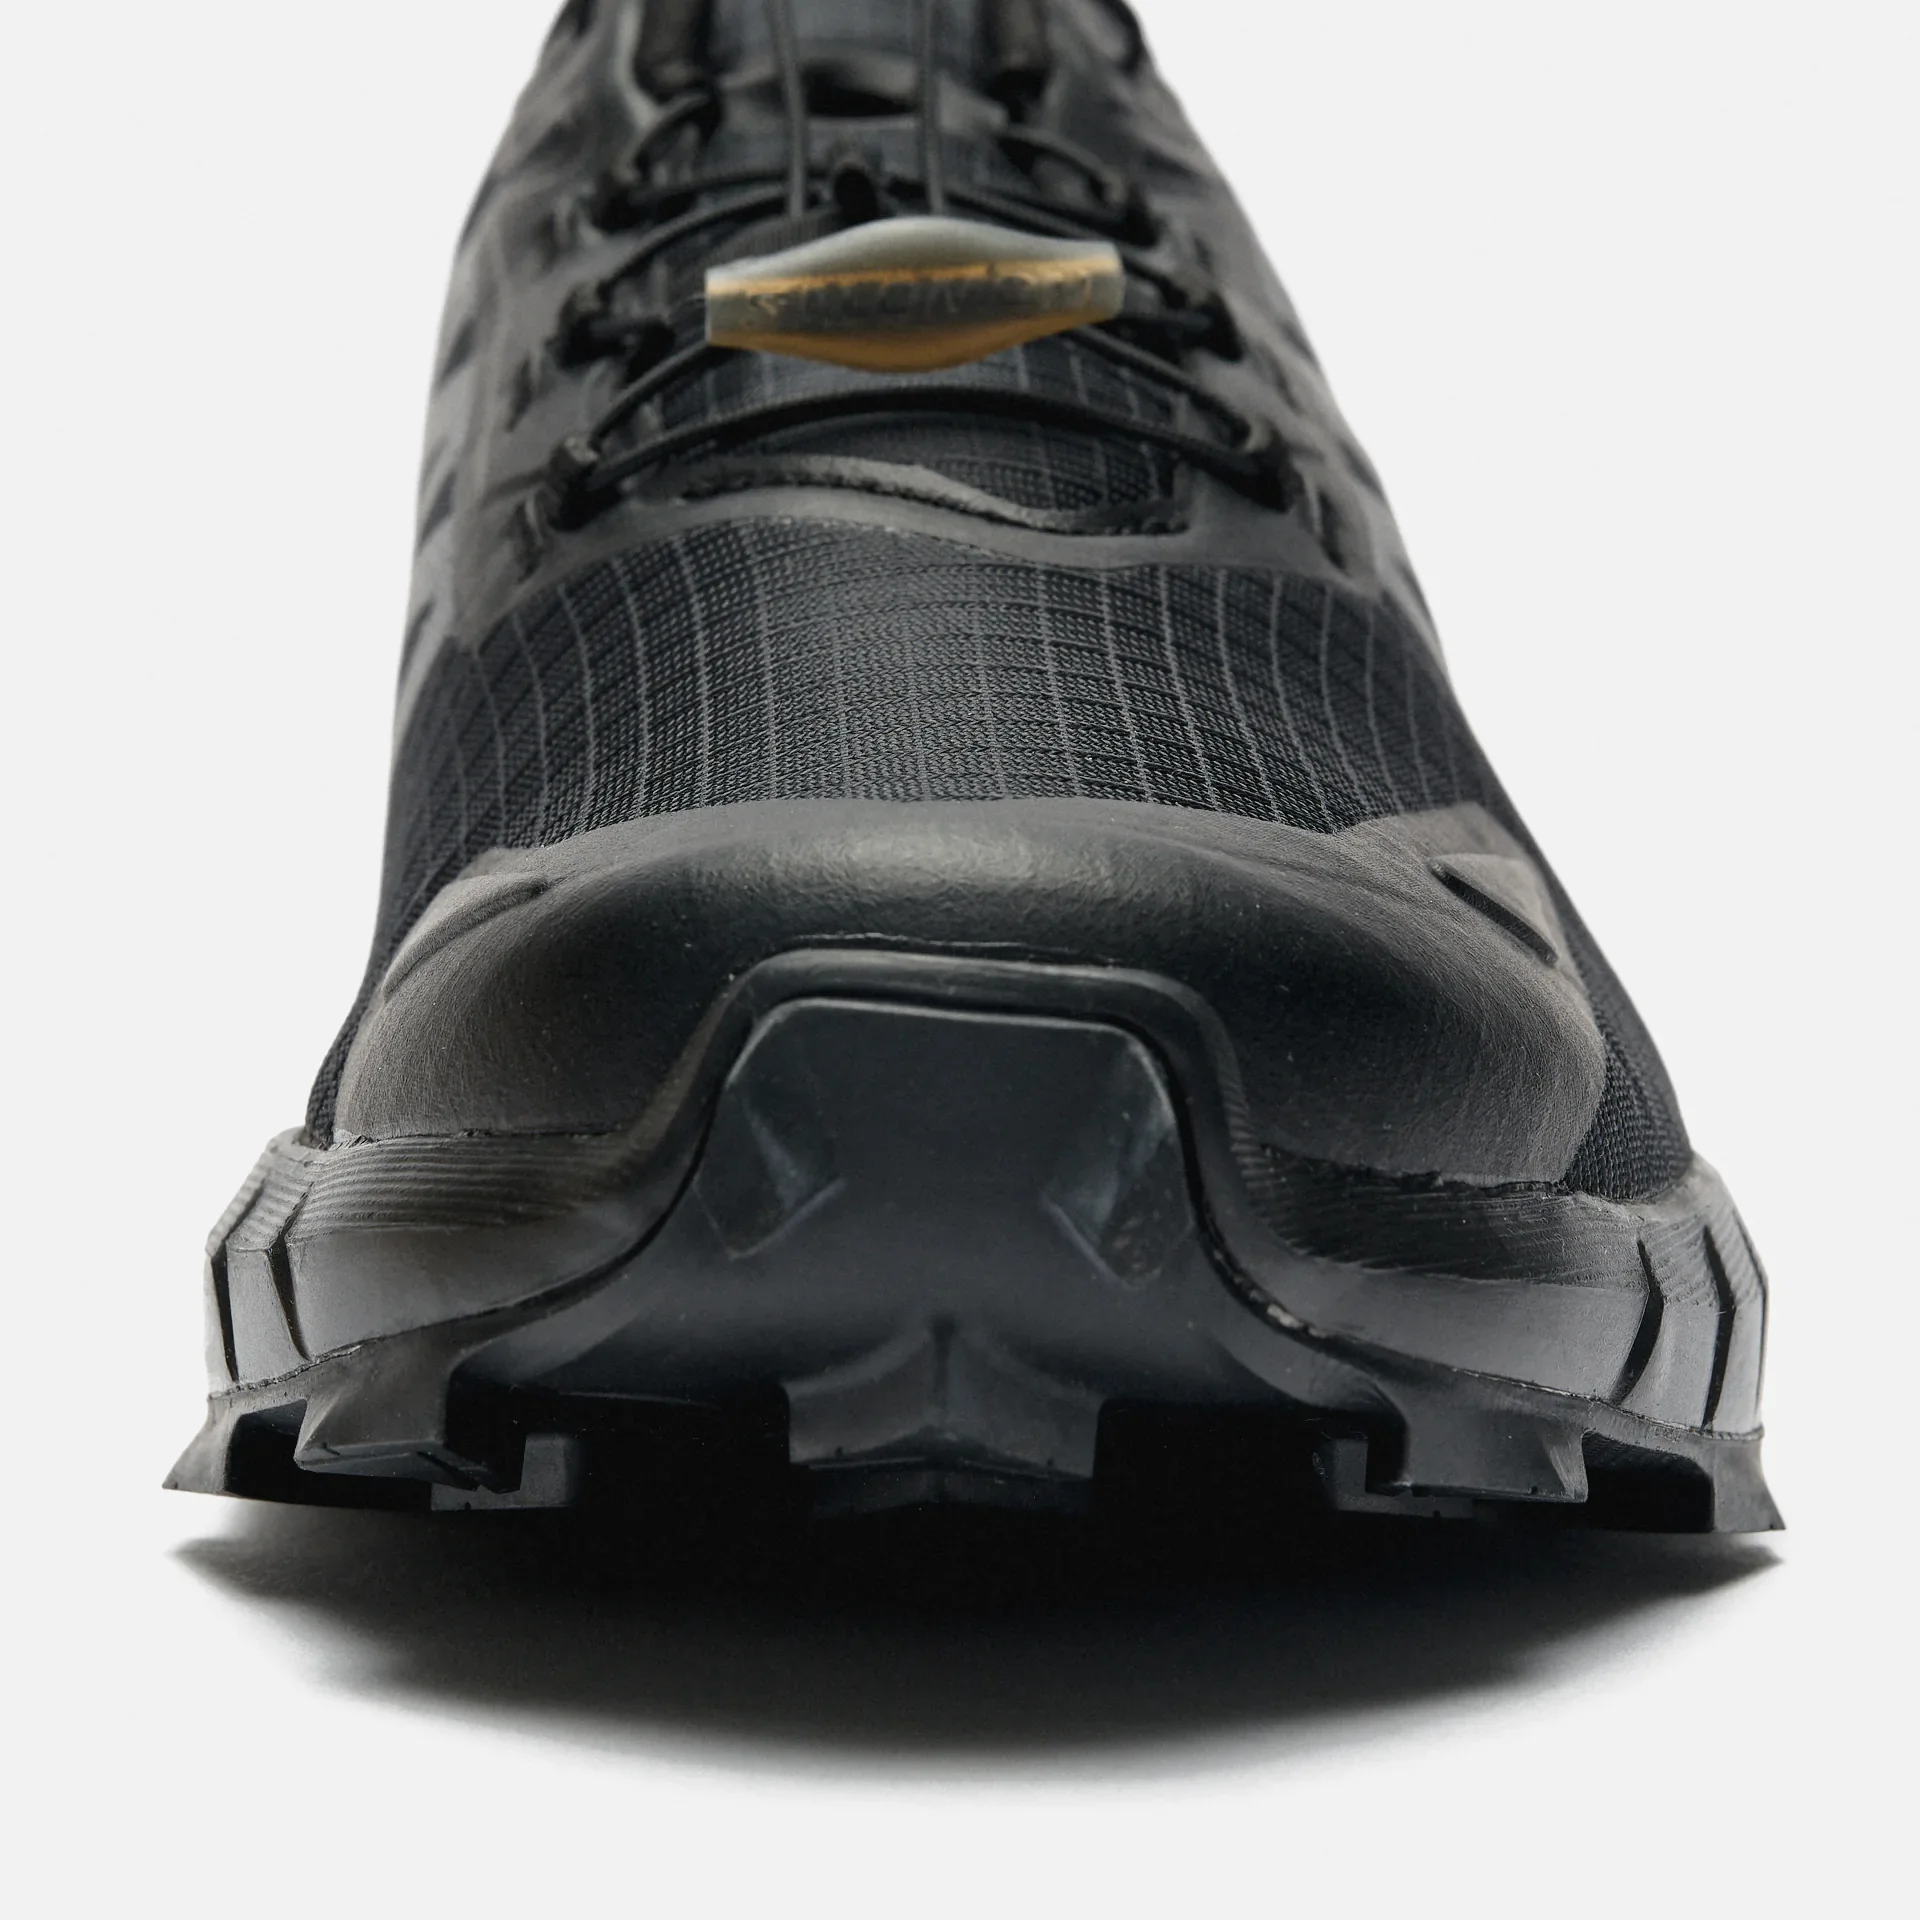 Salomon Supercross 4 Sneaker Black/Black/Black 